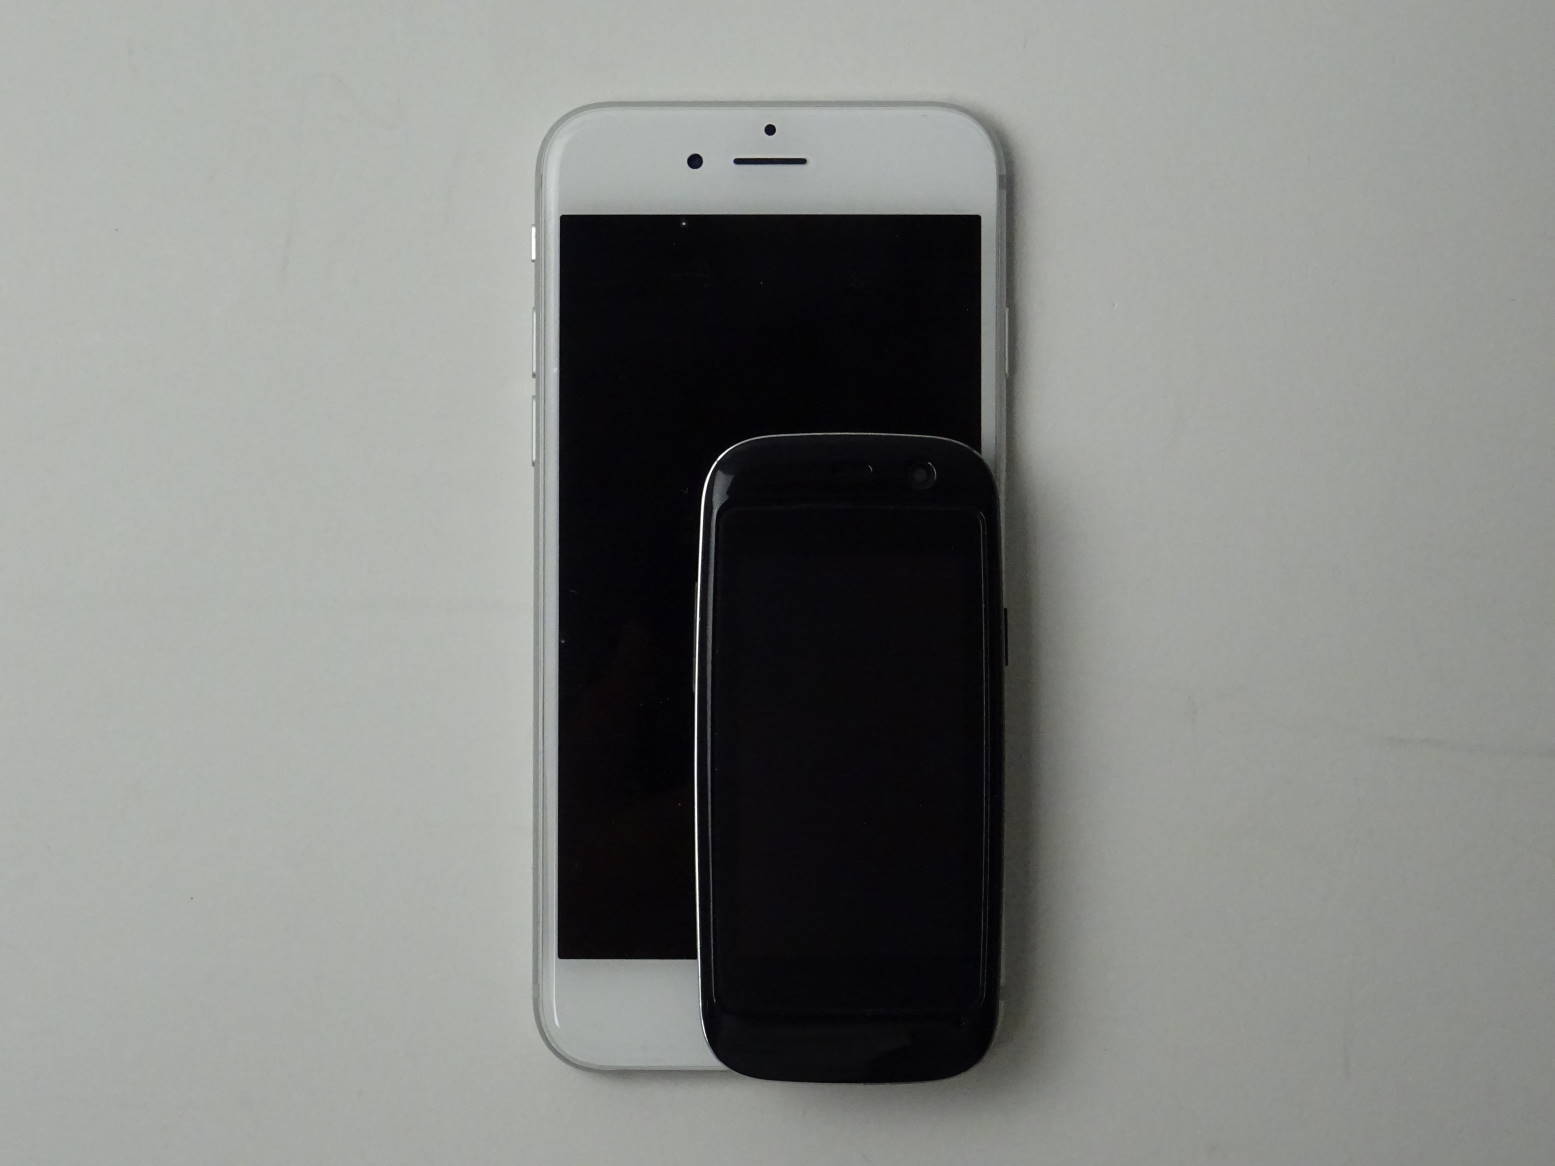 Micro X S240 と iPhone 6 の大きさ比較